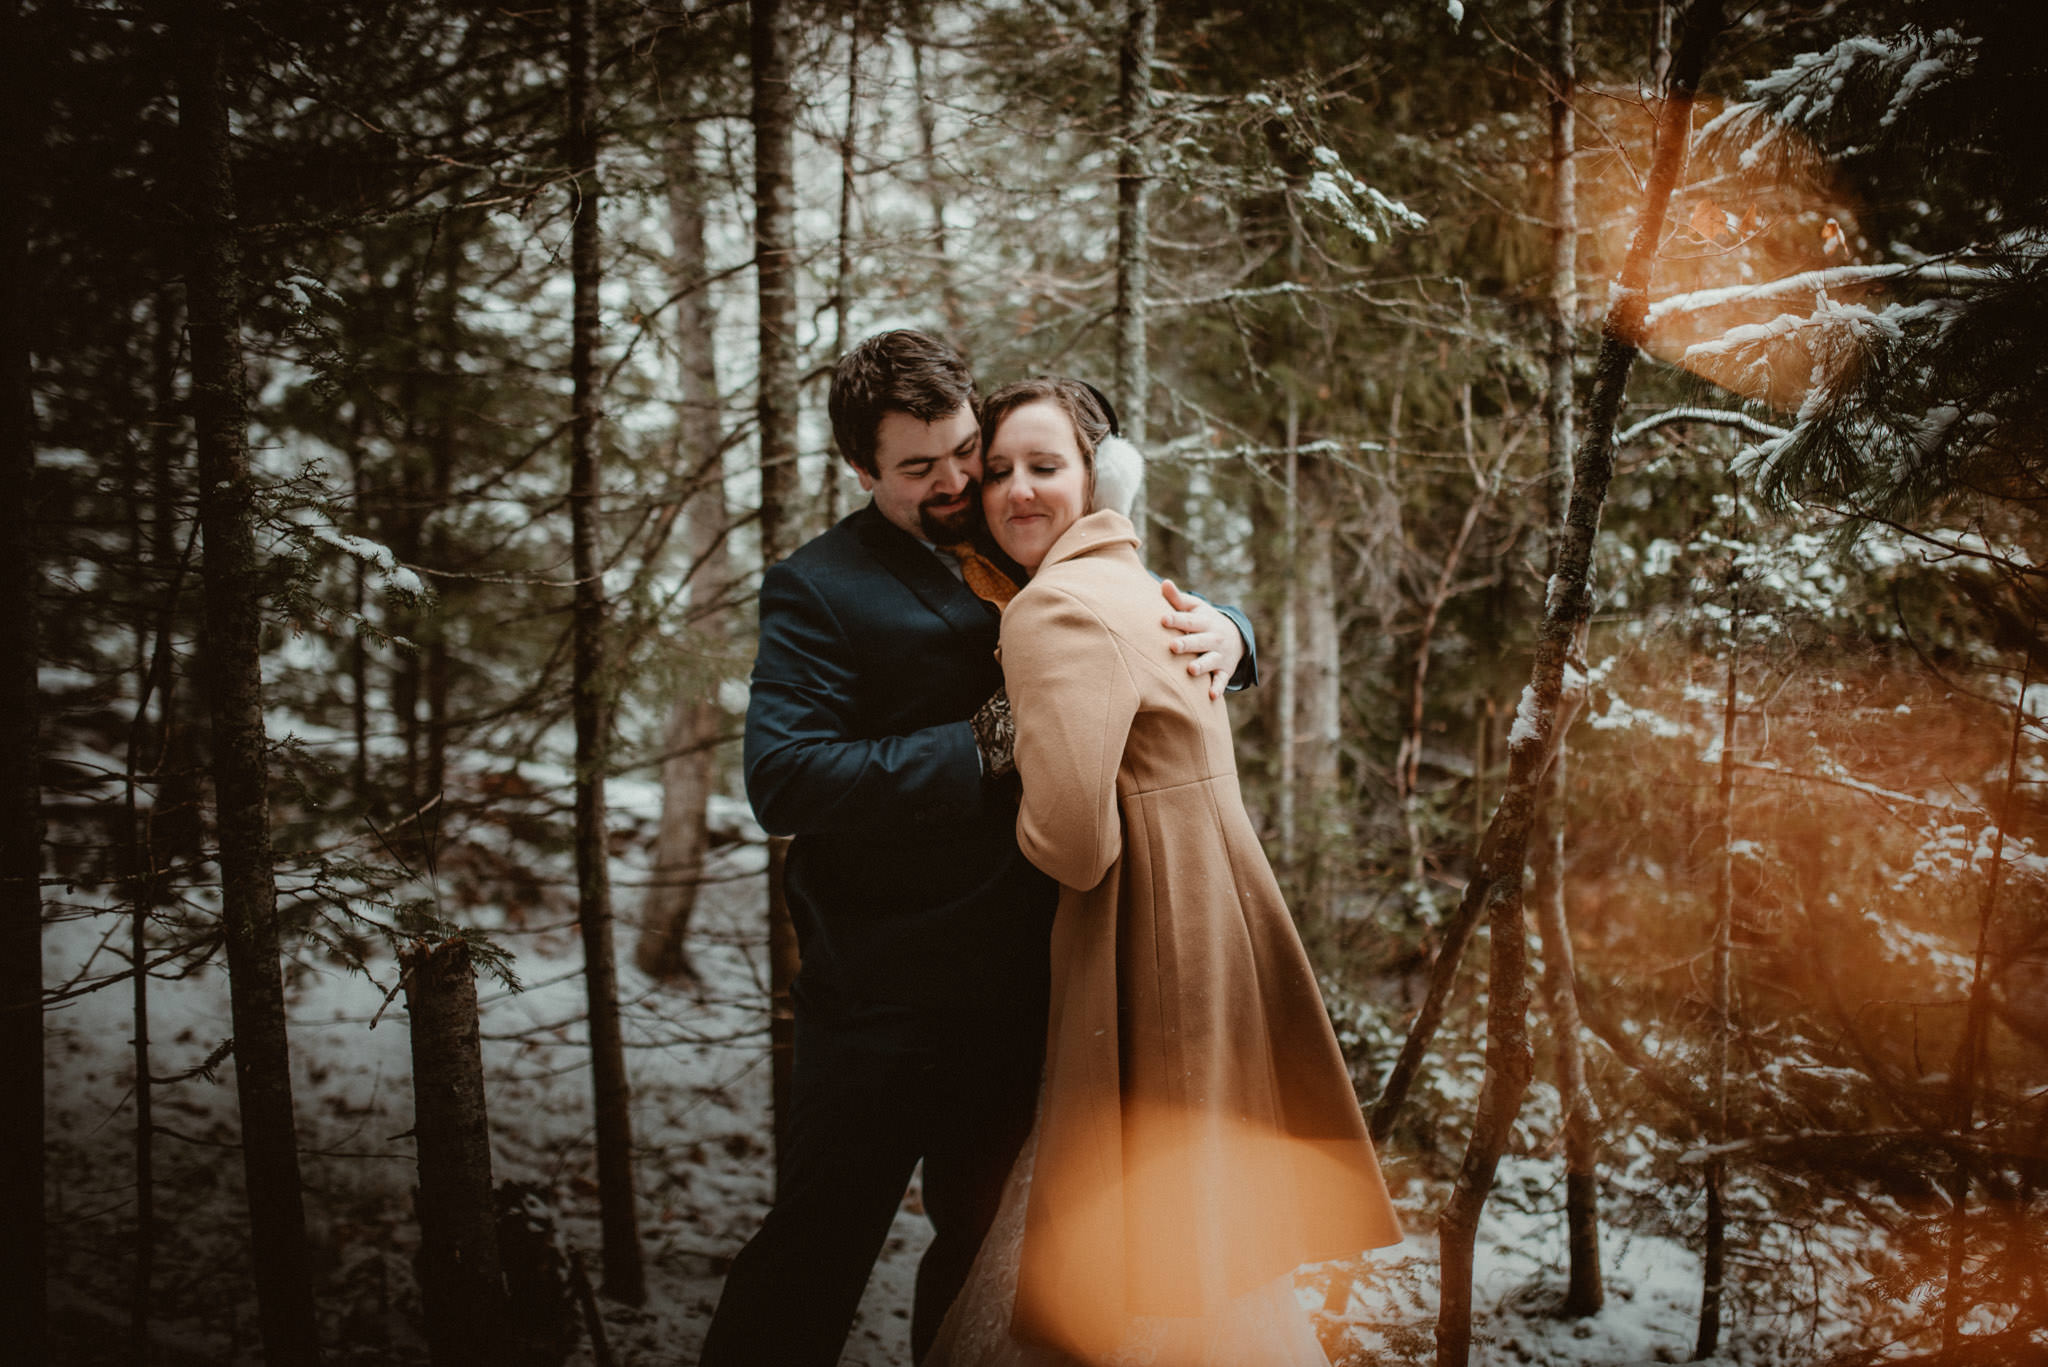 Sparkler photos at a winter elopement in Michigan